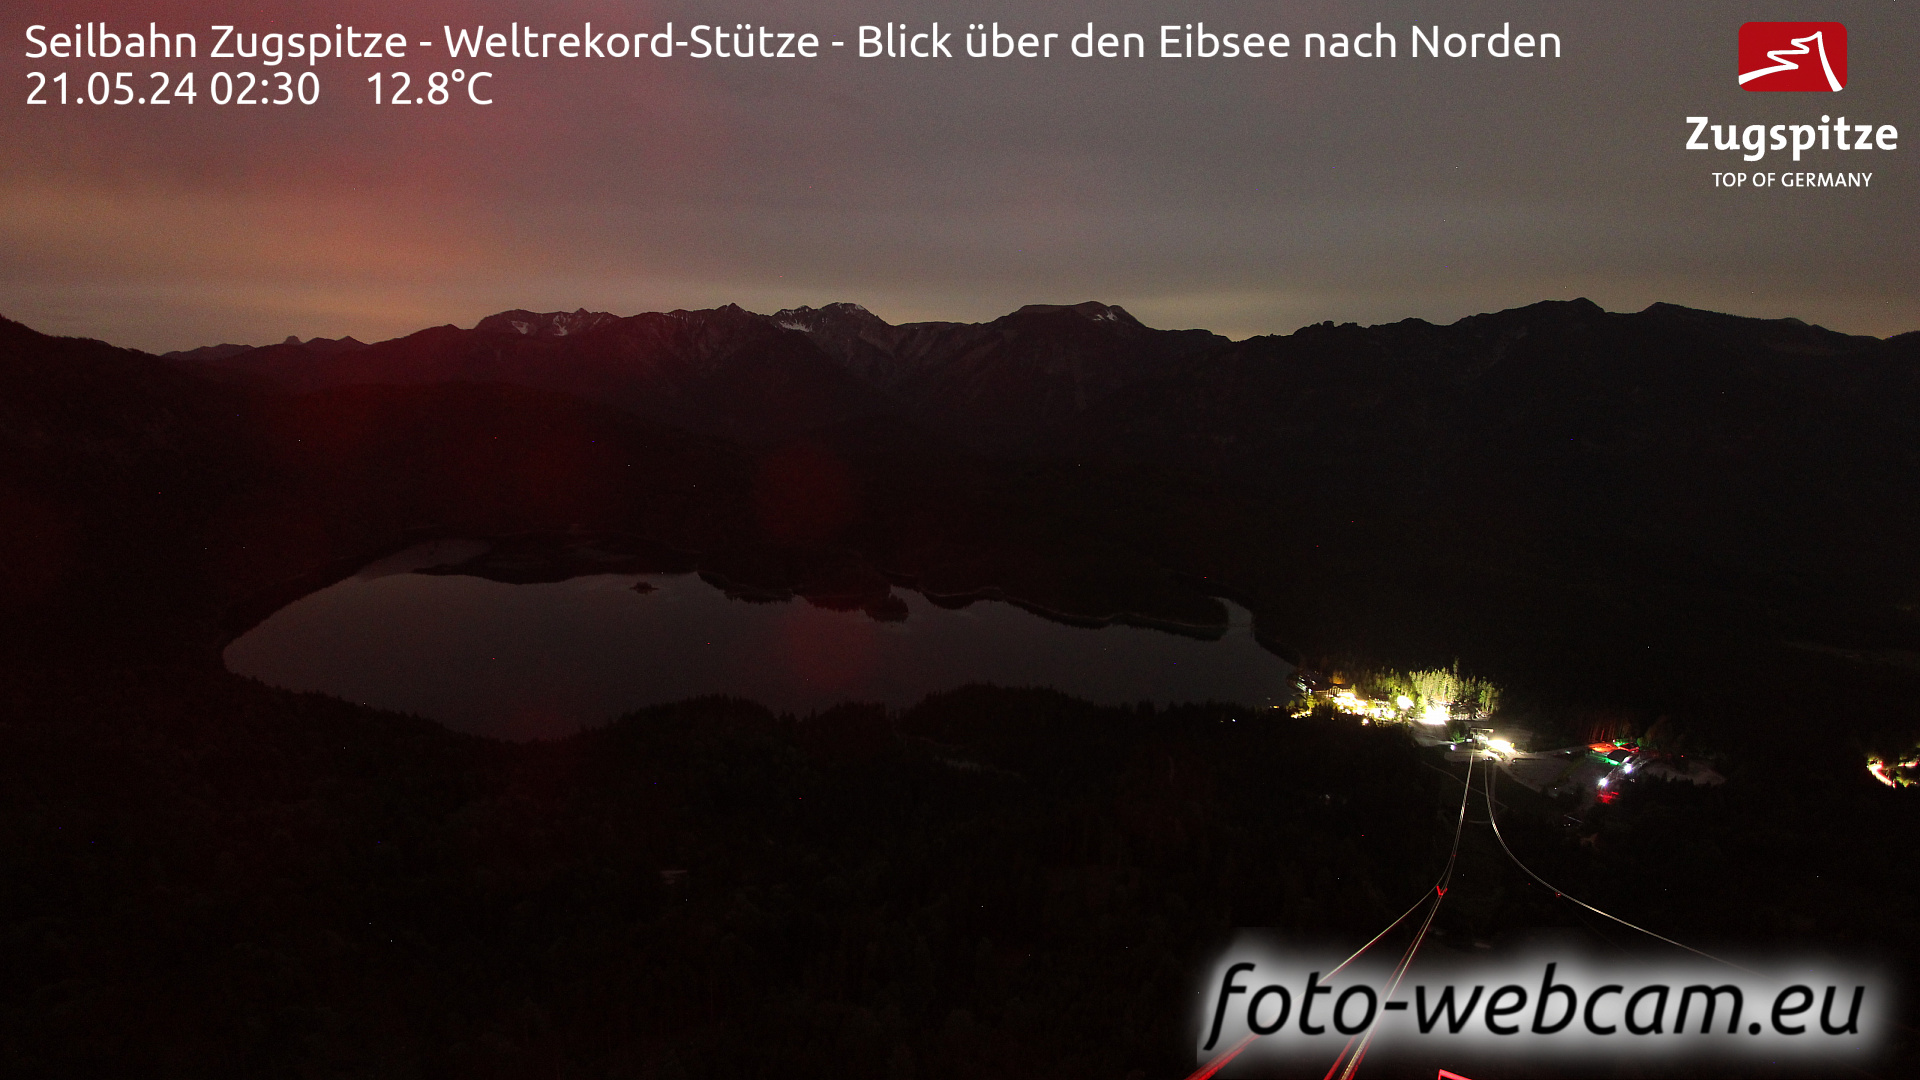 Zugspitze Thu. 02:49